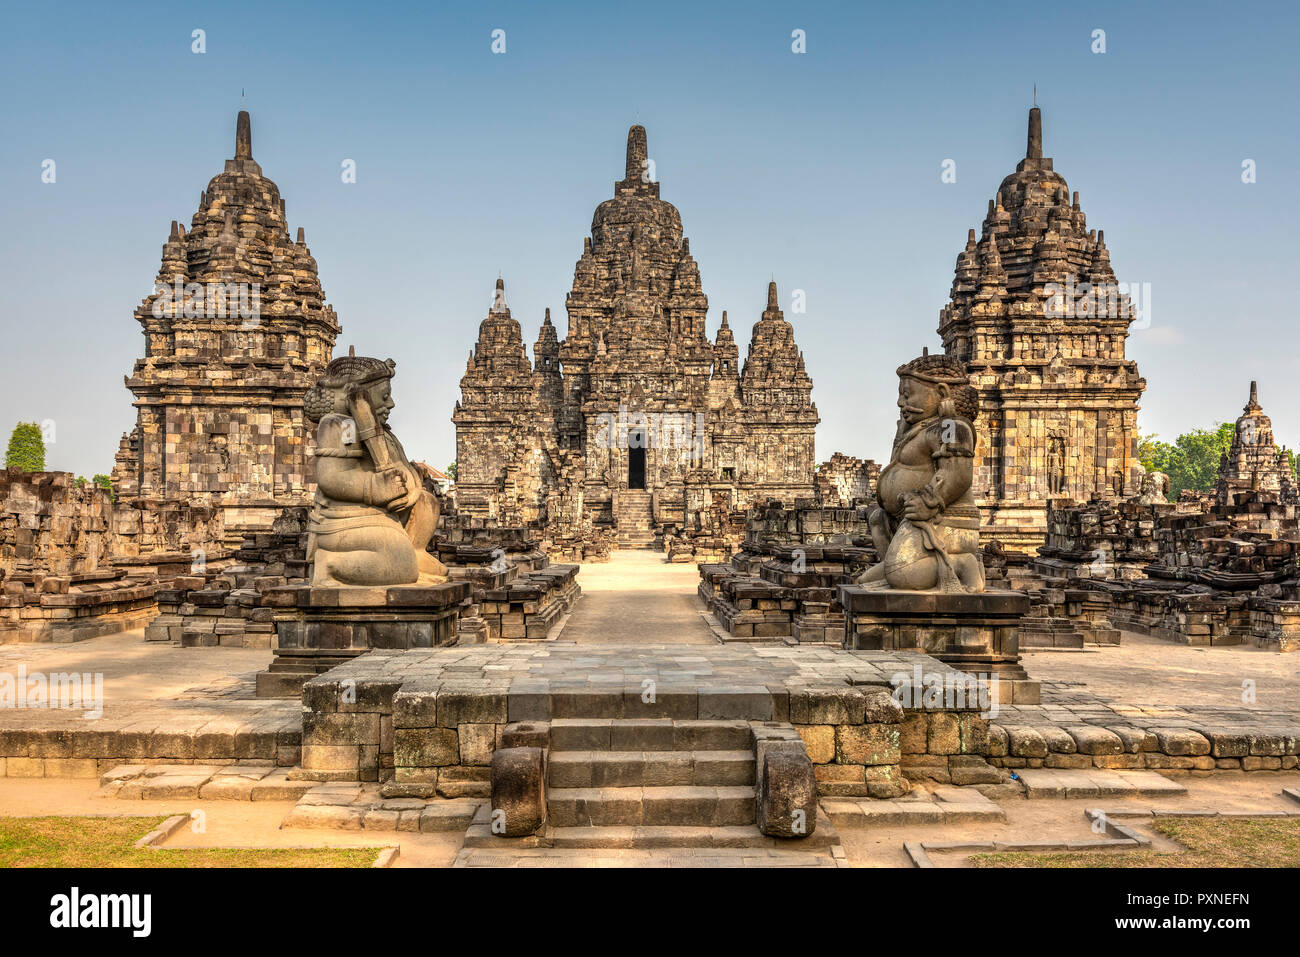 Candi Sewu, Prambanan temple complex, Yogyakarta, Java, Indonesia Stock Photo